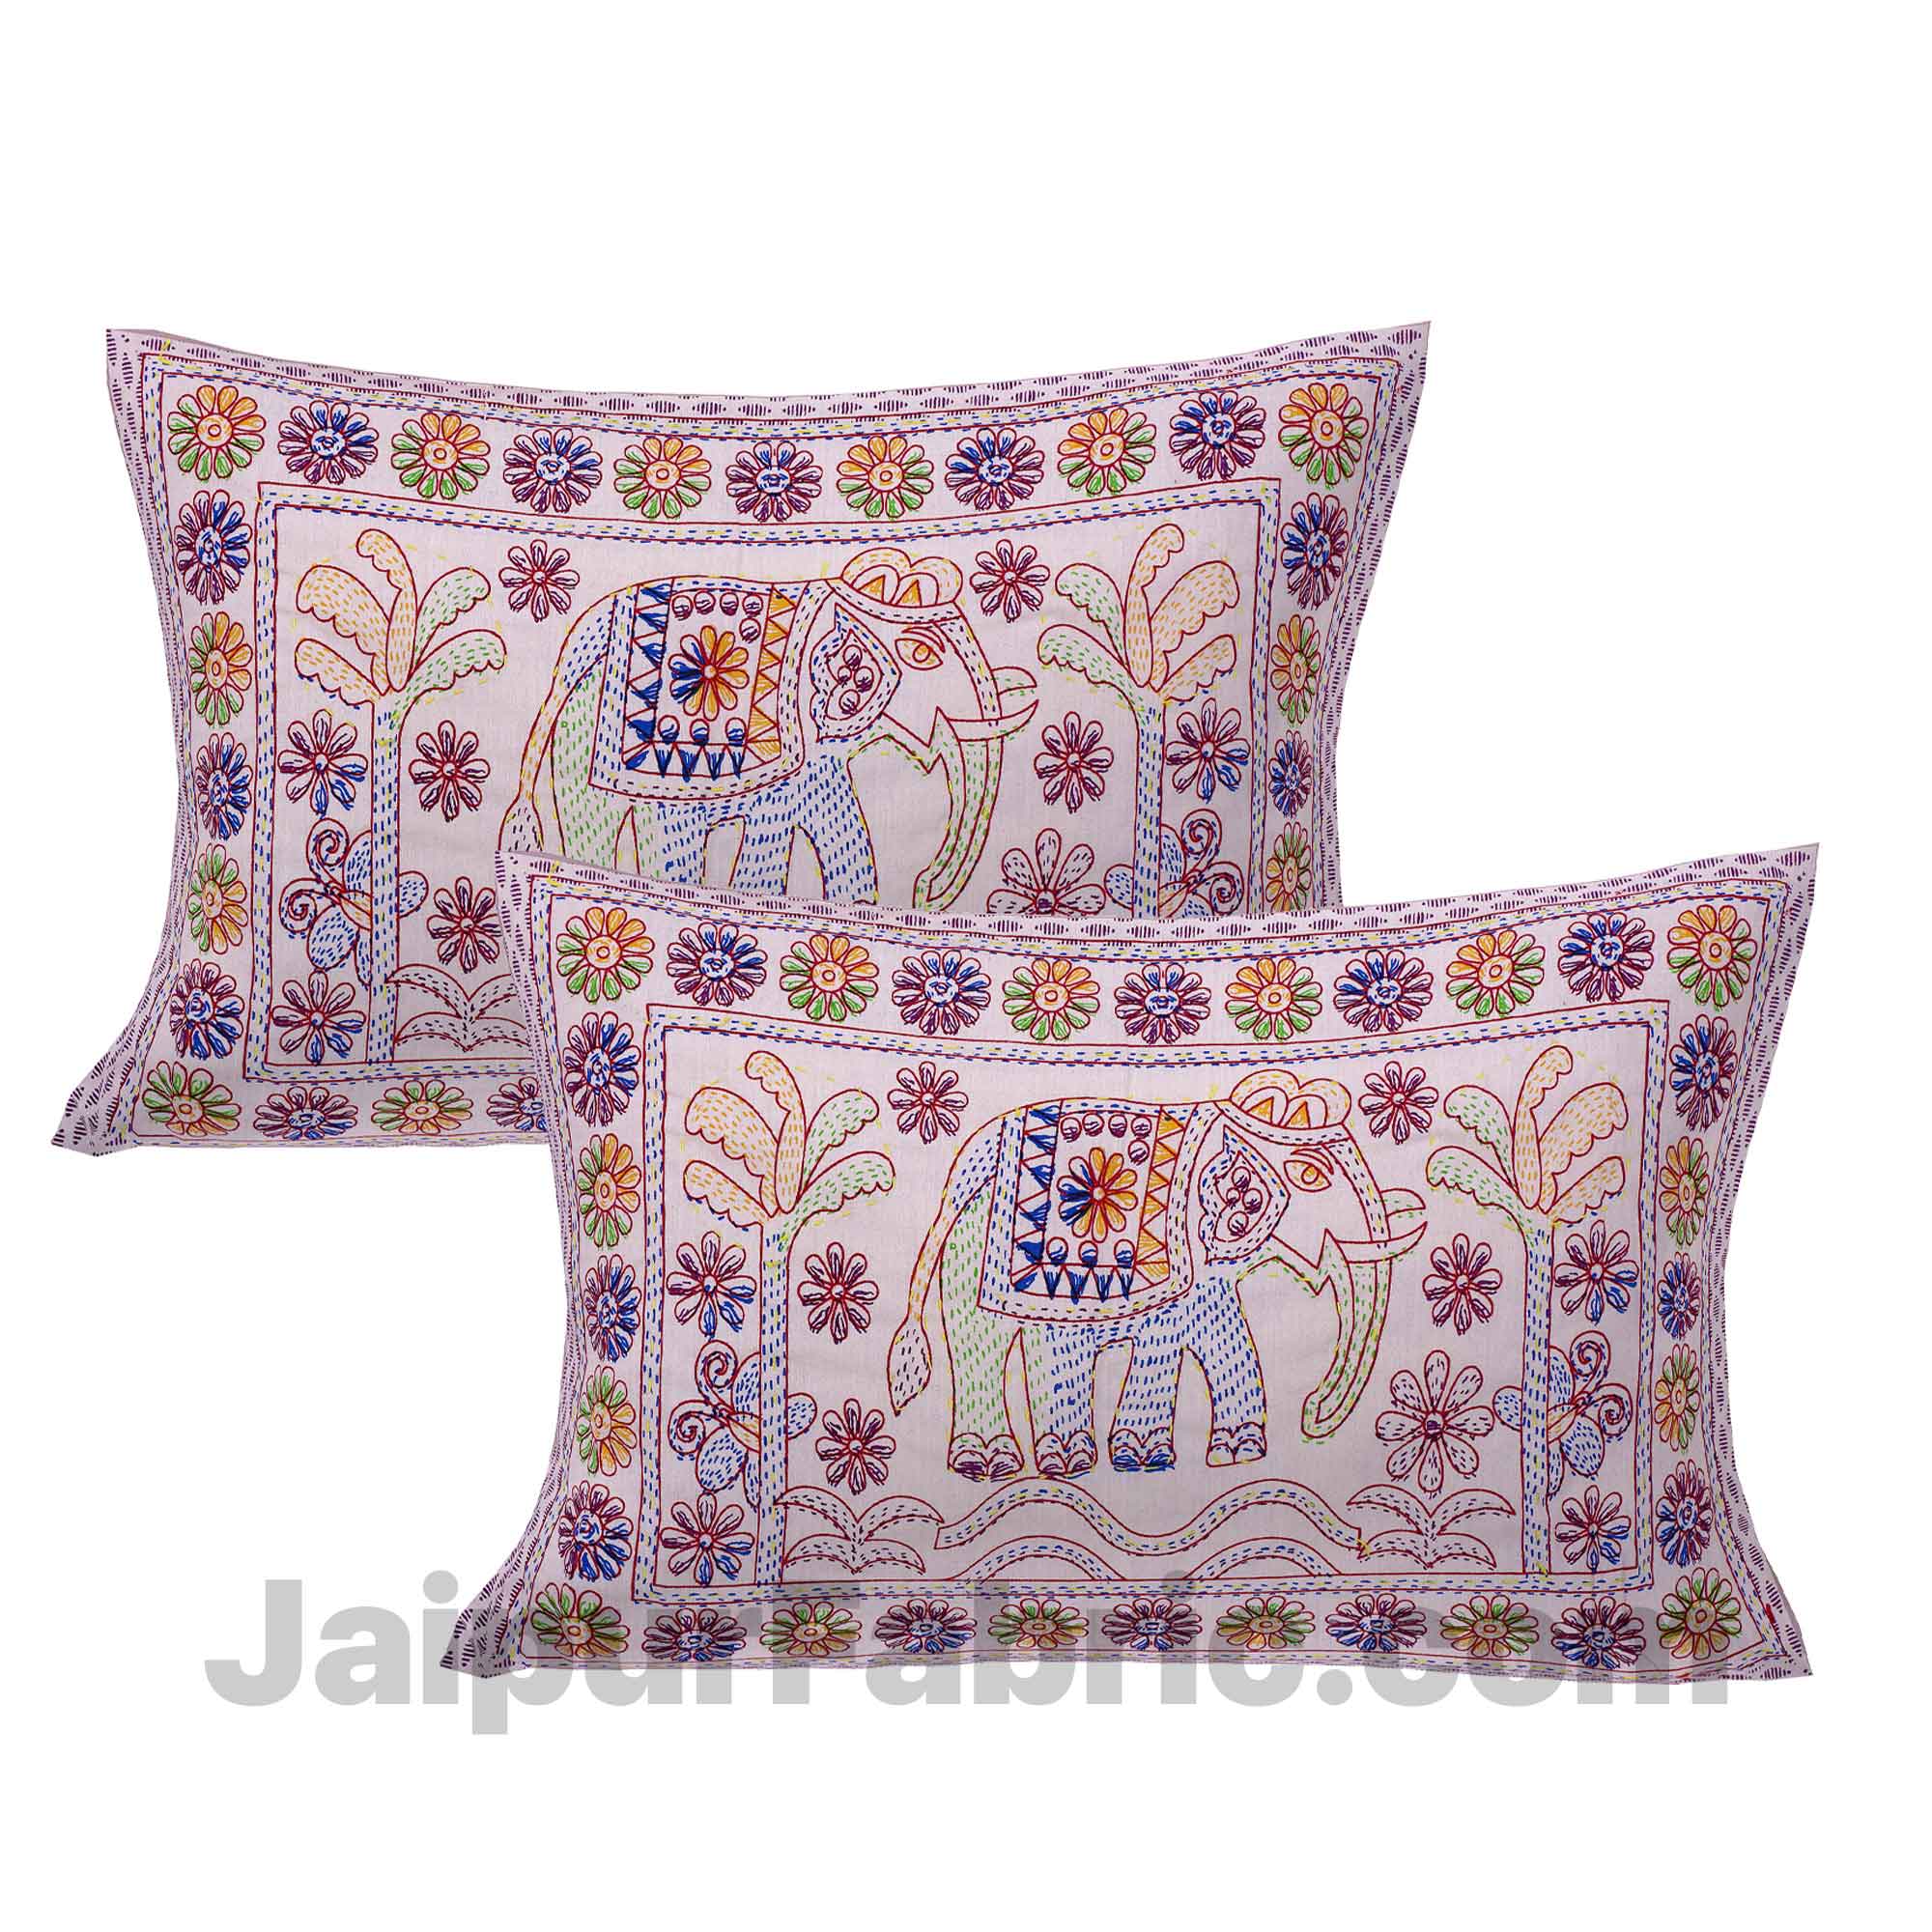 Beautiful Scenery Kantha Thread Work Embroidery Double Bedsheet / Dohar / Light Blanket / Thin Comforter